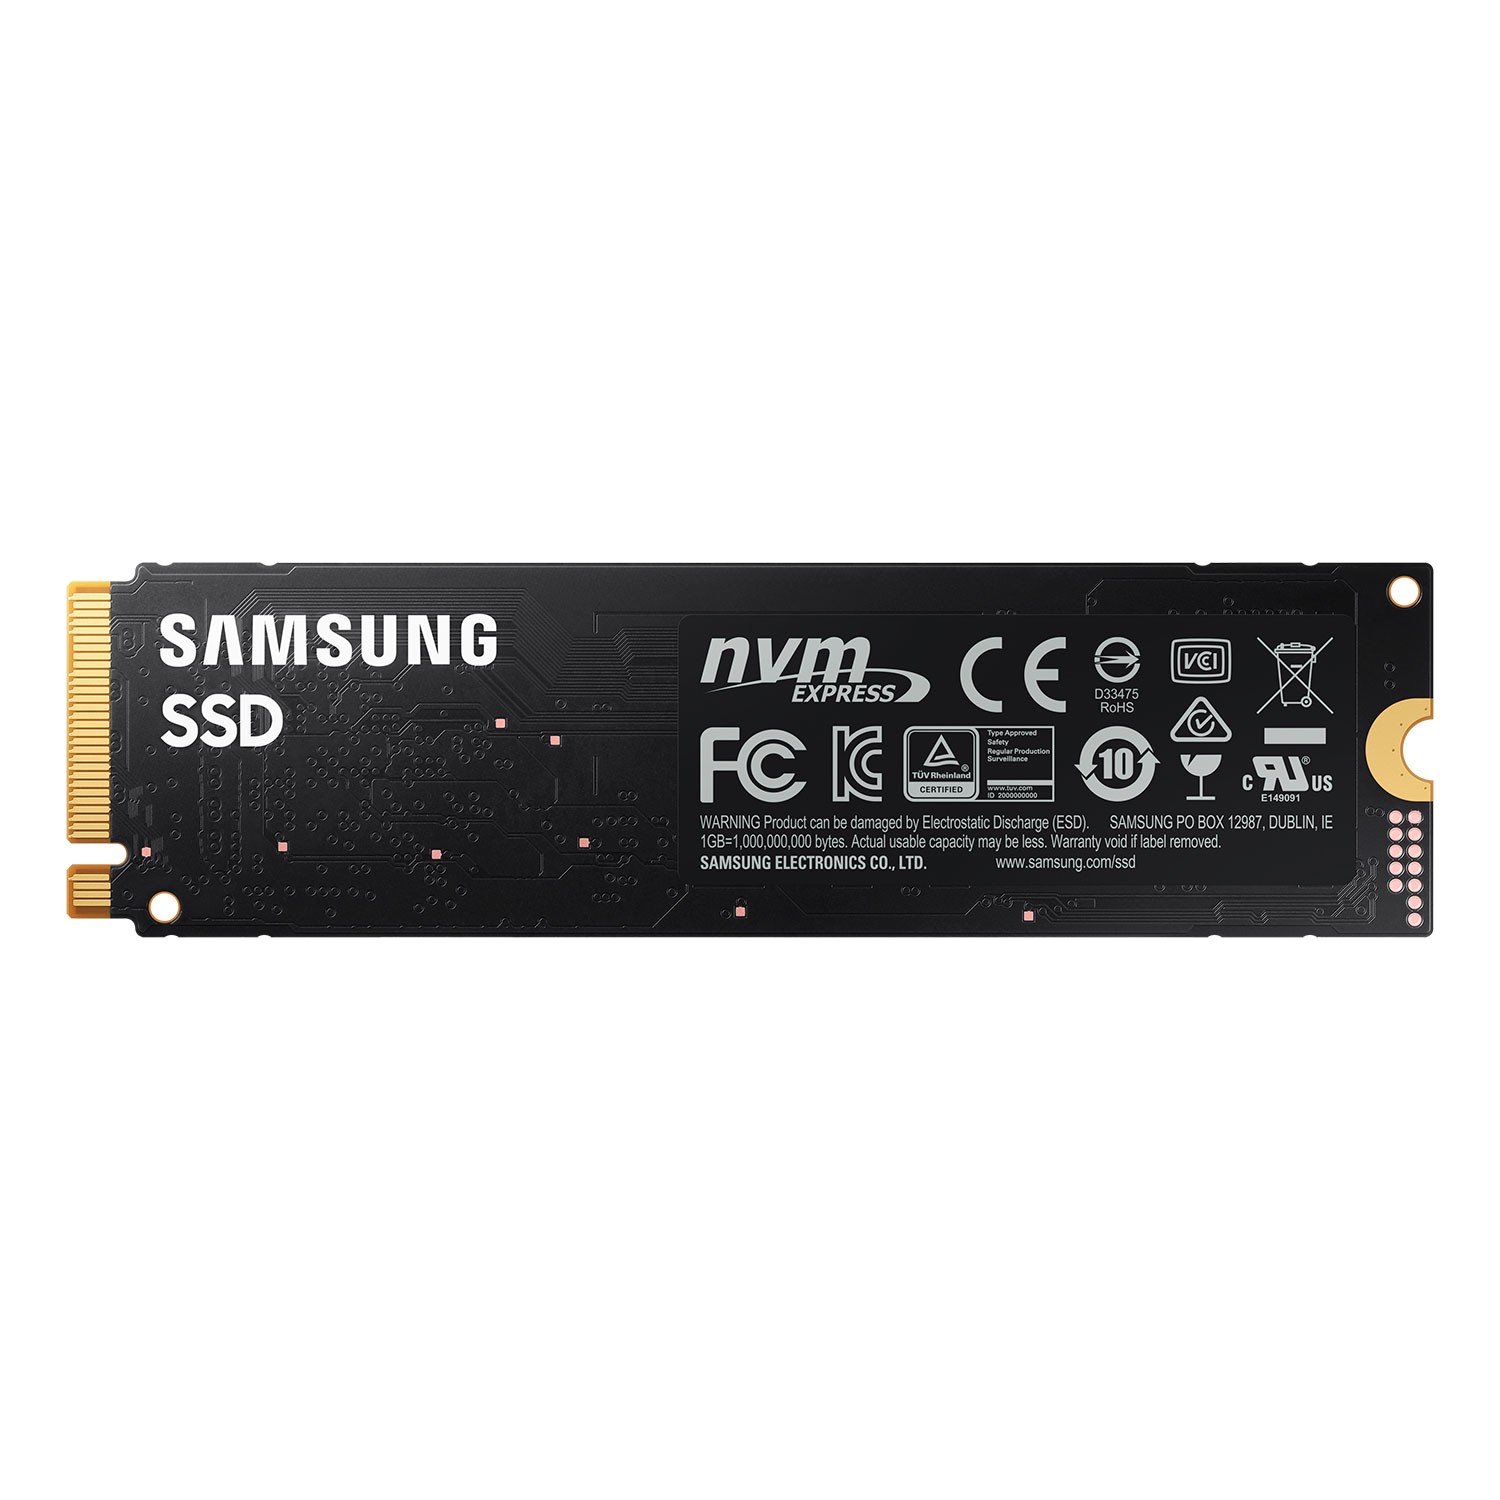 SAMSUNG MZ-V8V1T0BW 1TB 3500/3000MB/s NVMe PCIe M.2 SSD 980